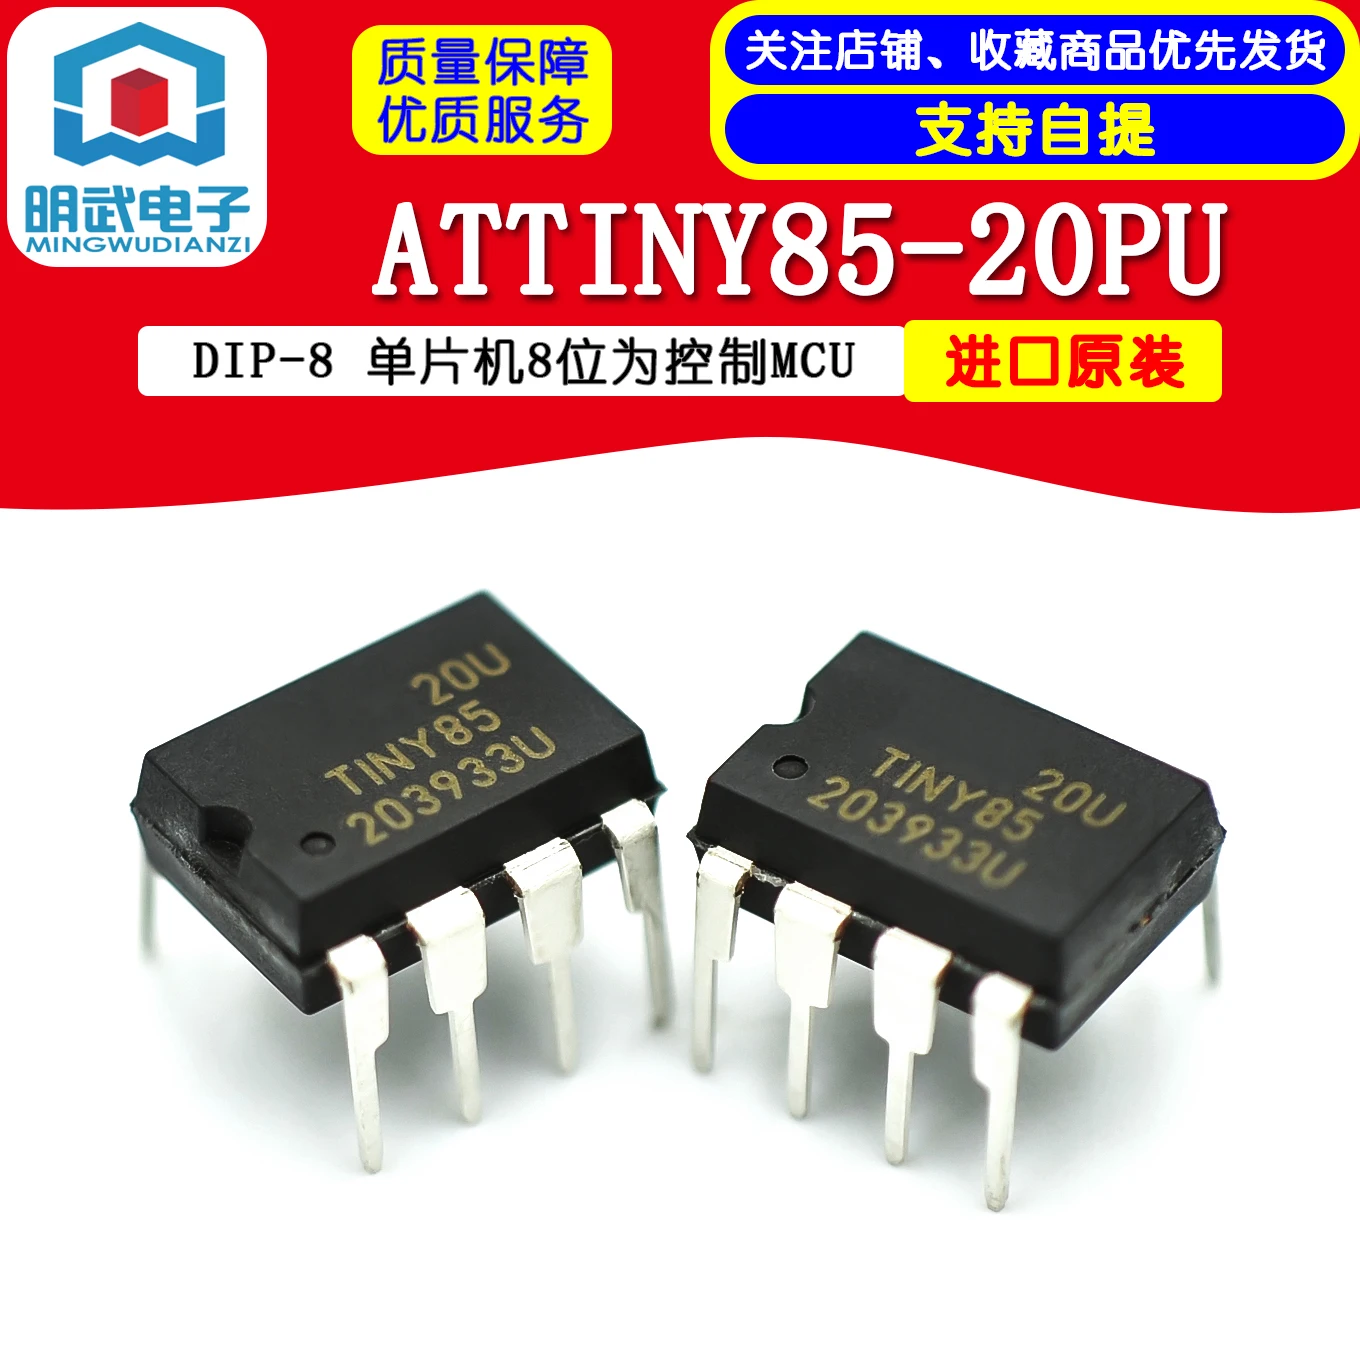 

10PCS Imported Original ATTINY85-20PU DIP-8 Microcontroller 8-bit For Control MCU